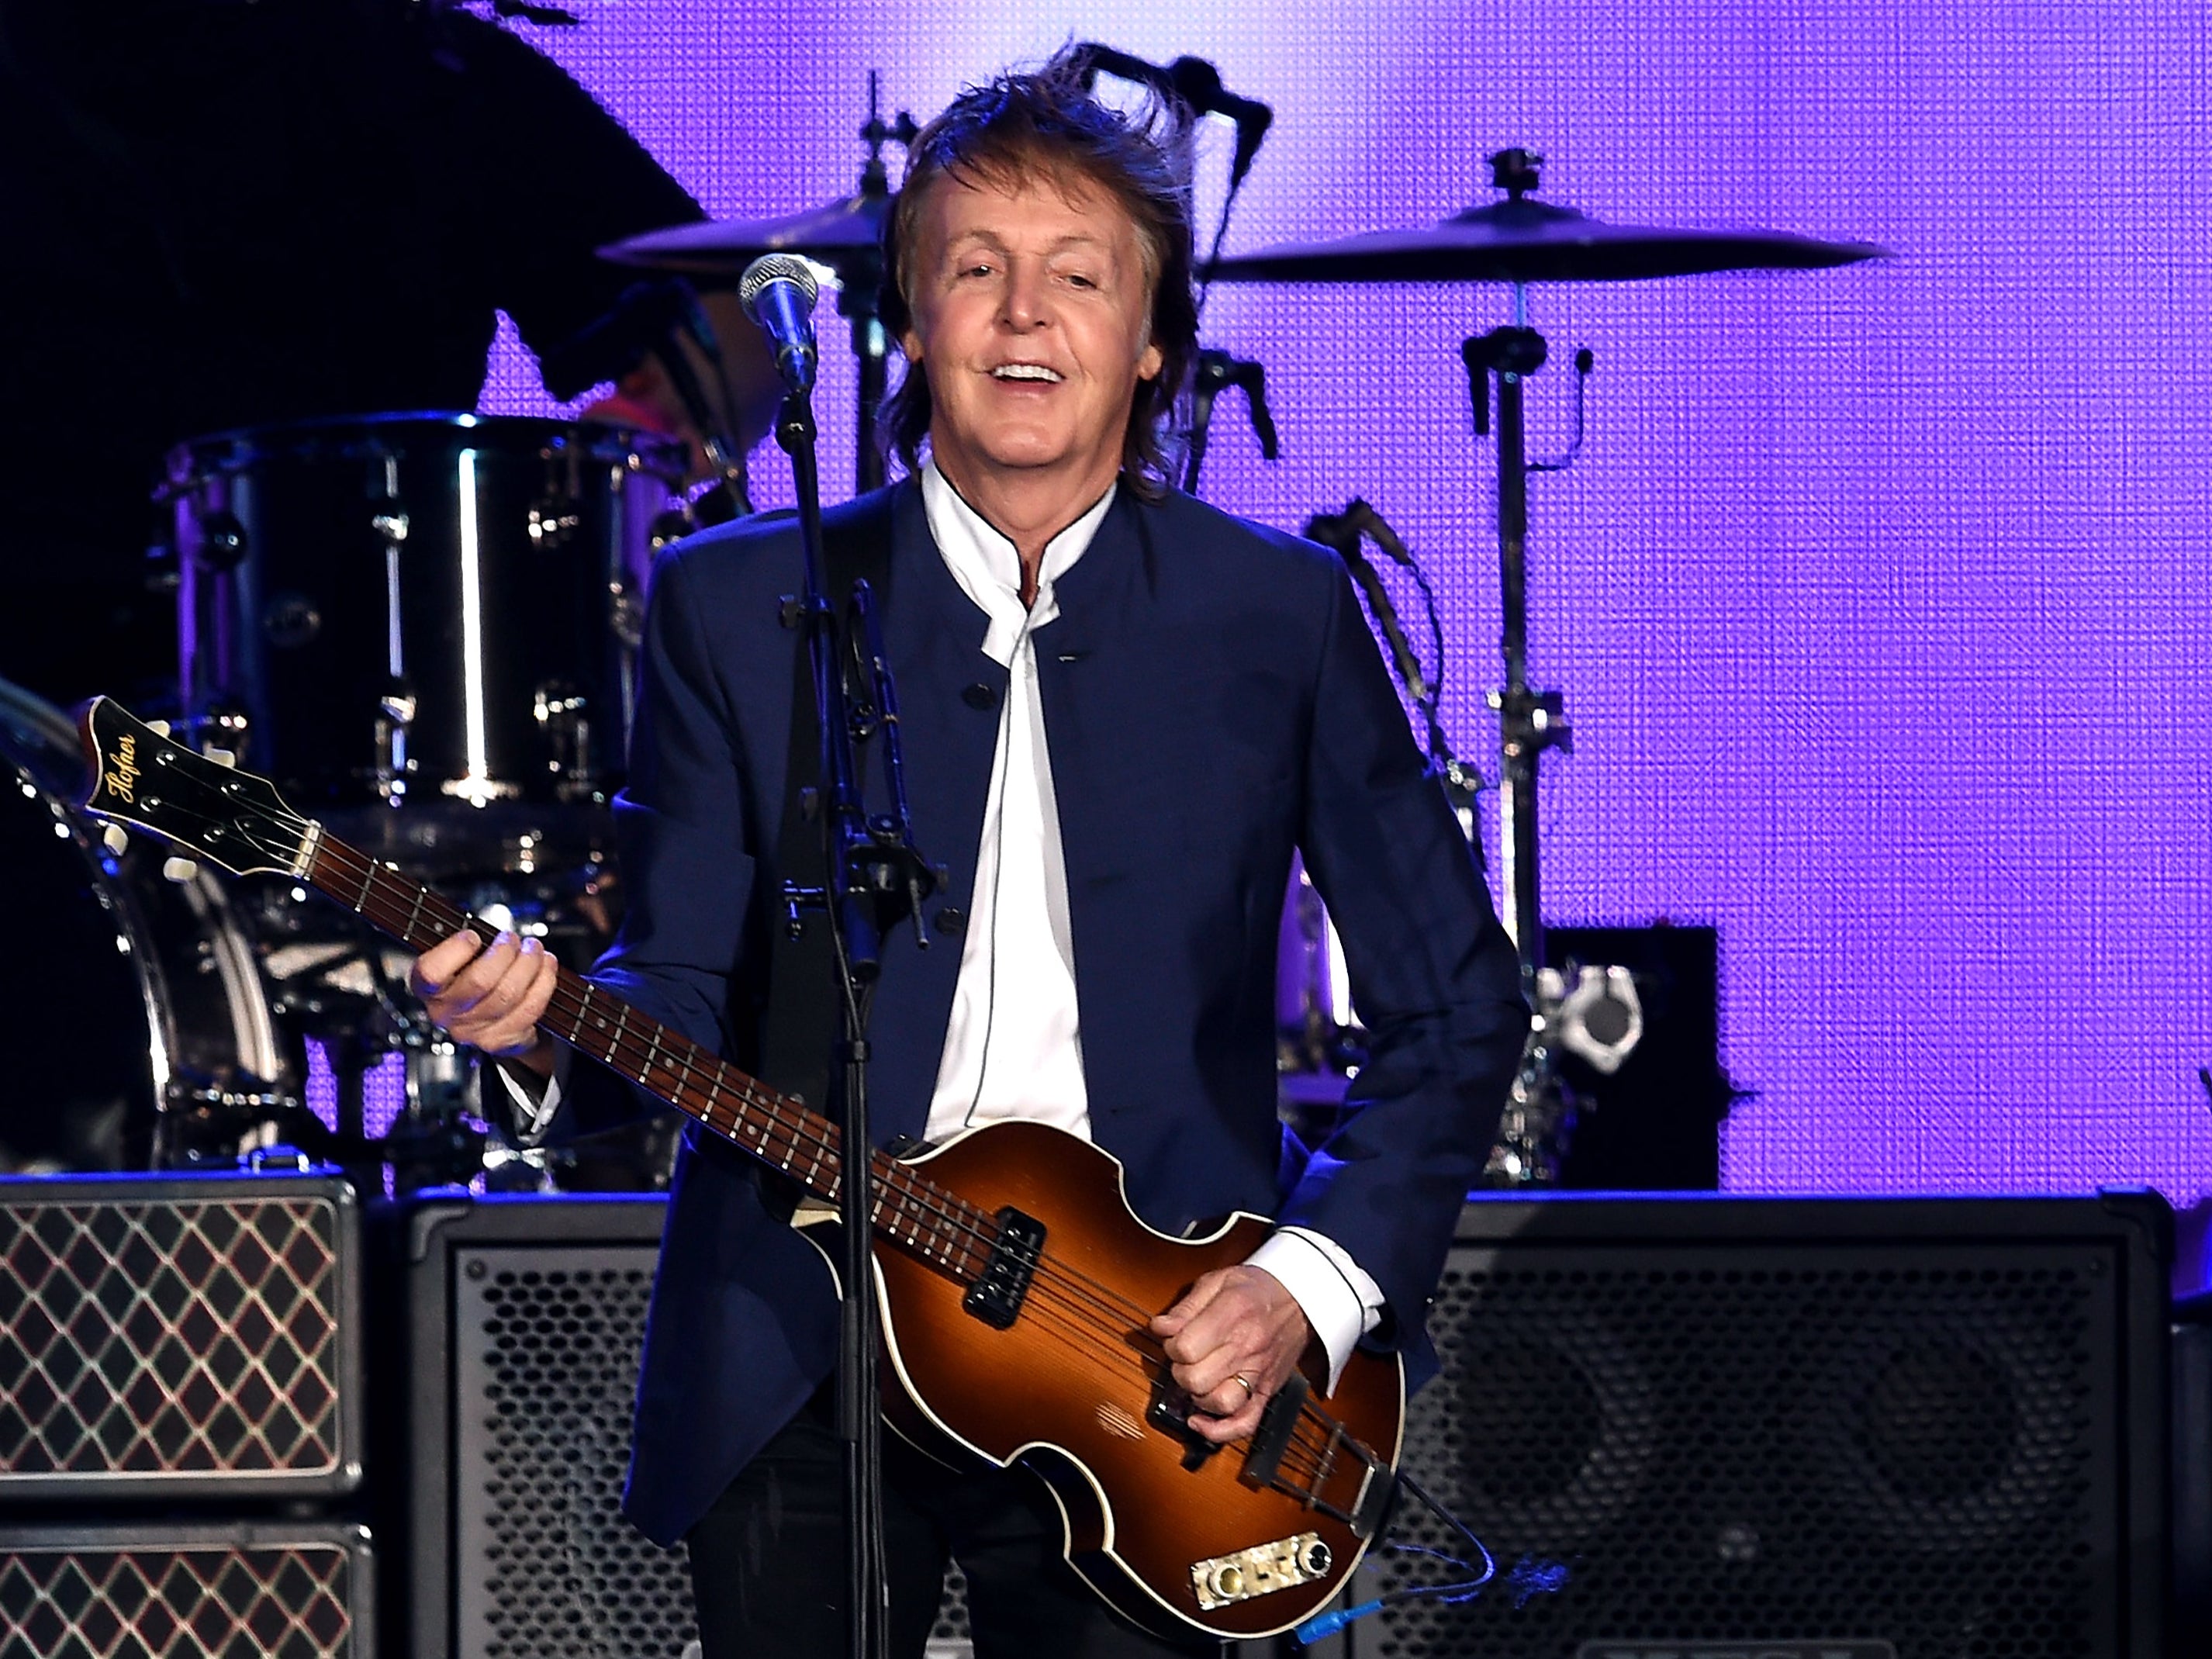 Paul McCartney is the UK’s first musician billionaire